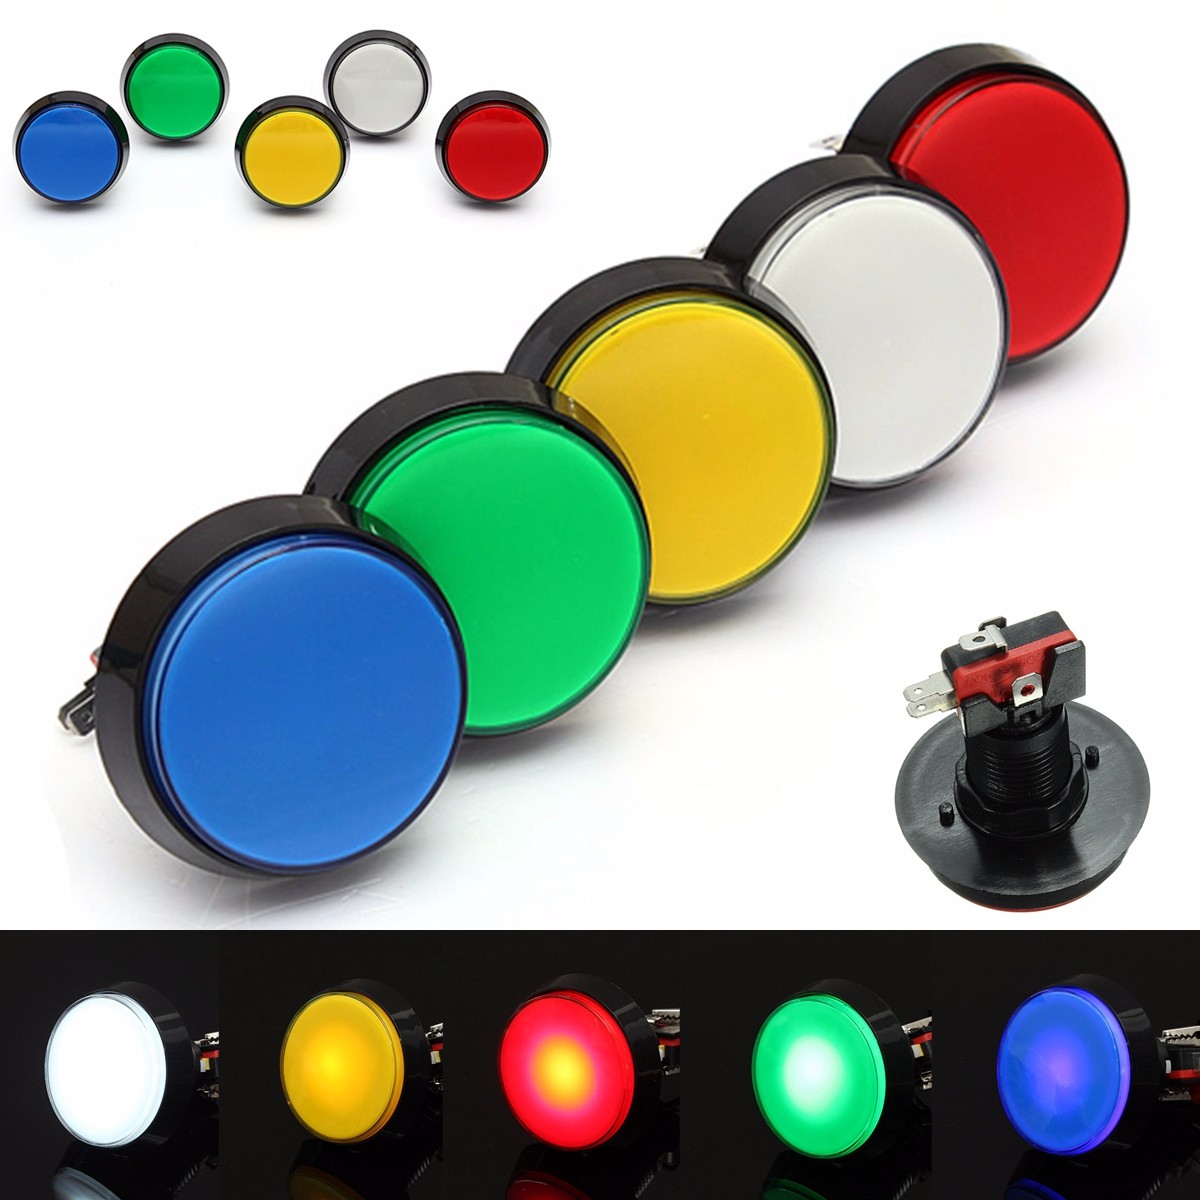 5V/12V 48mm Color LED Light Lamp Big Round Arcade Video Game Player Push Buttons 